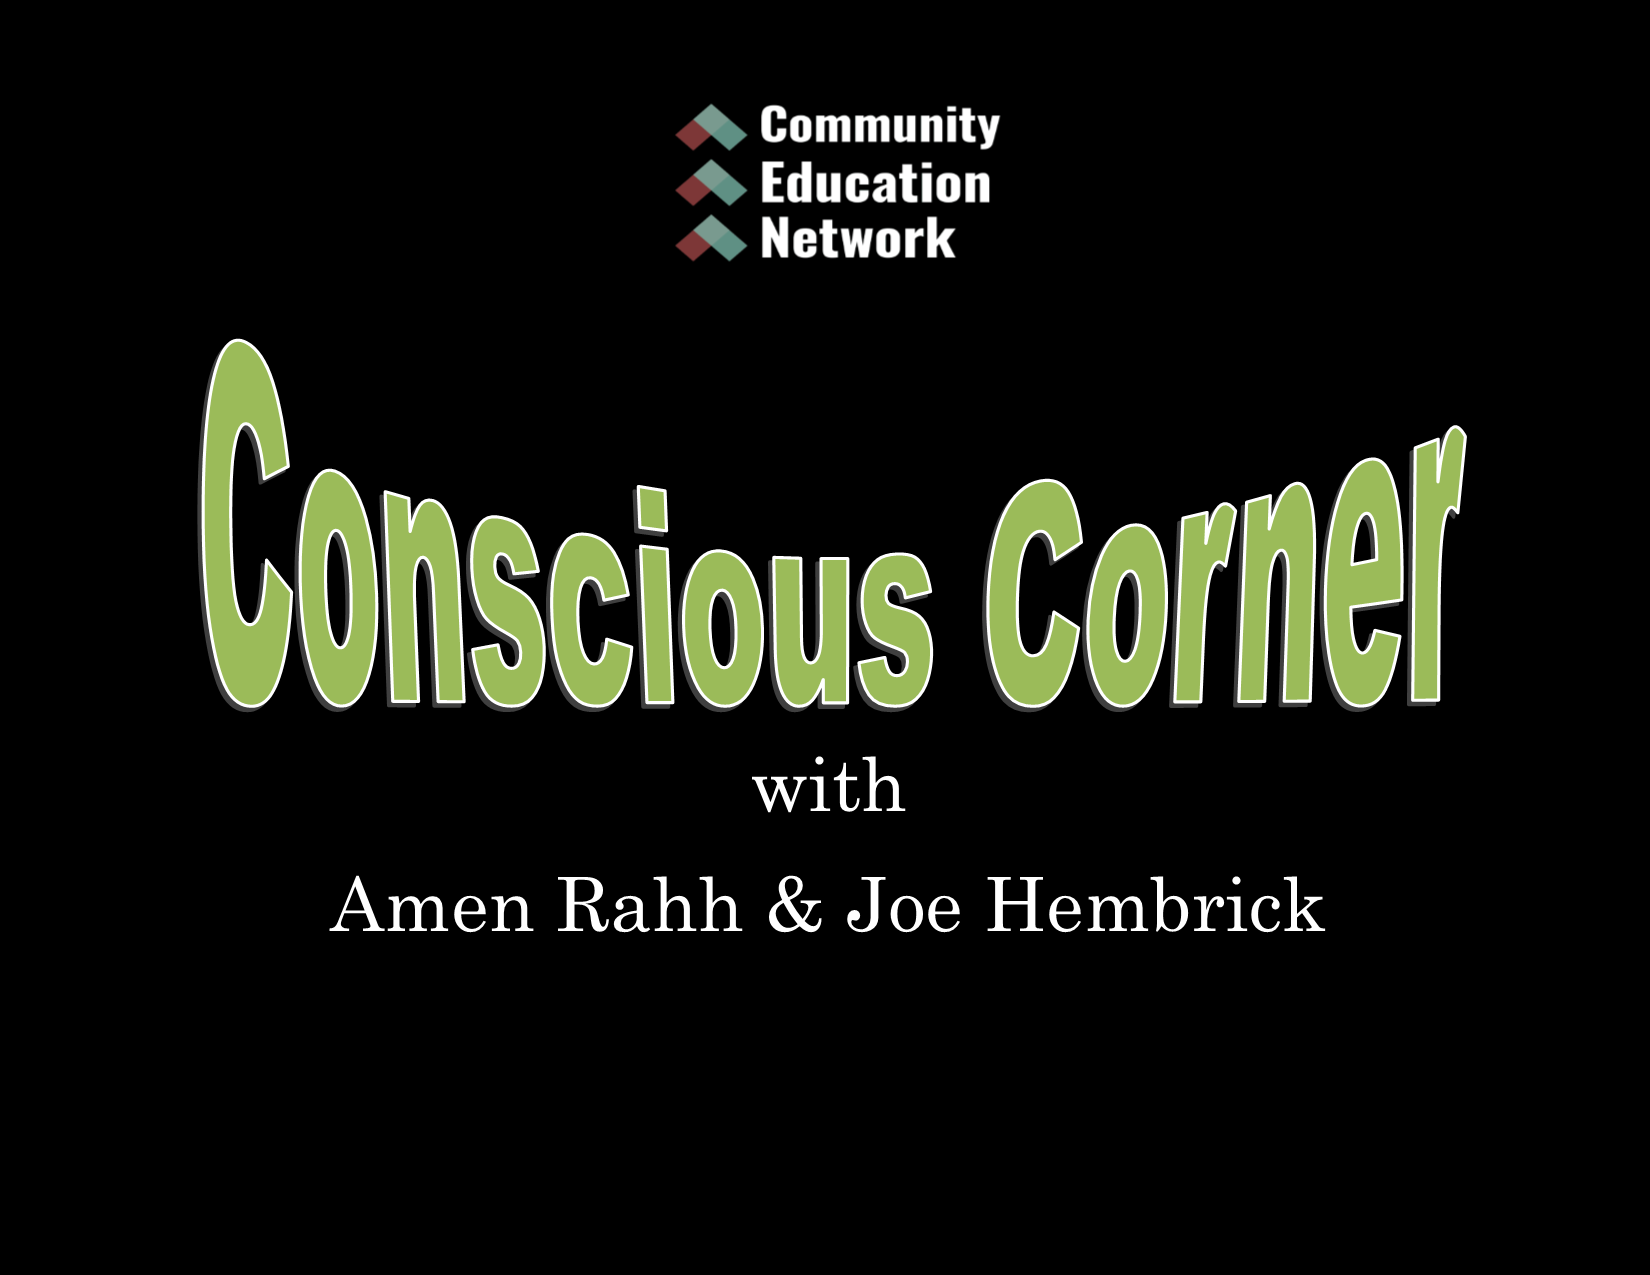 Conscious Corner - Author Dr. Terri Strong - The Children's Book "Lil' Wiz"